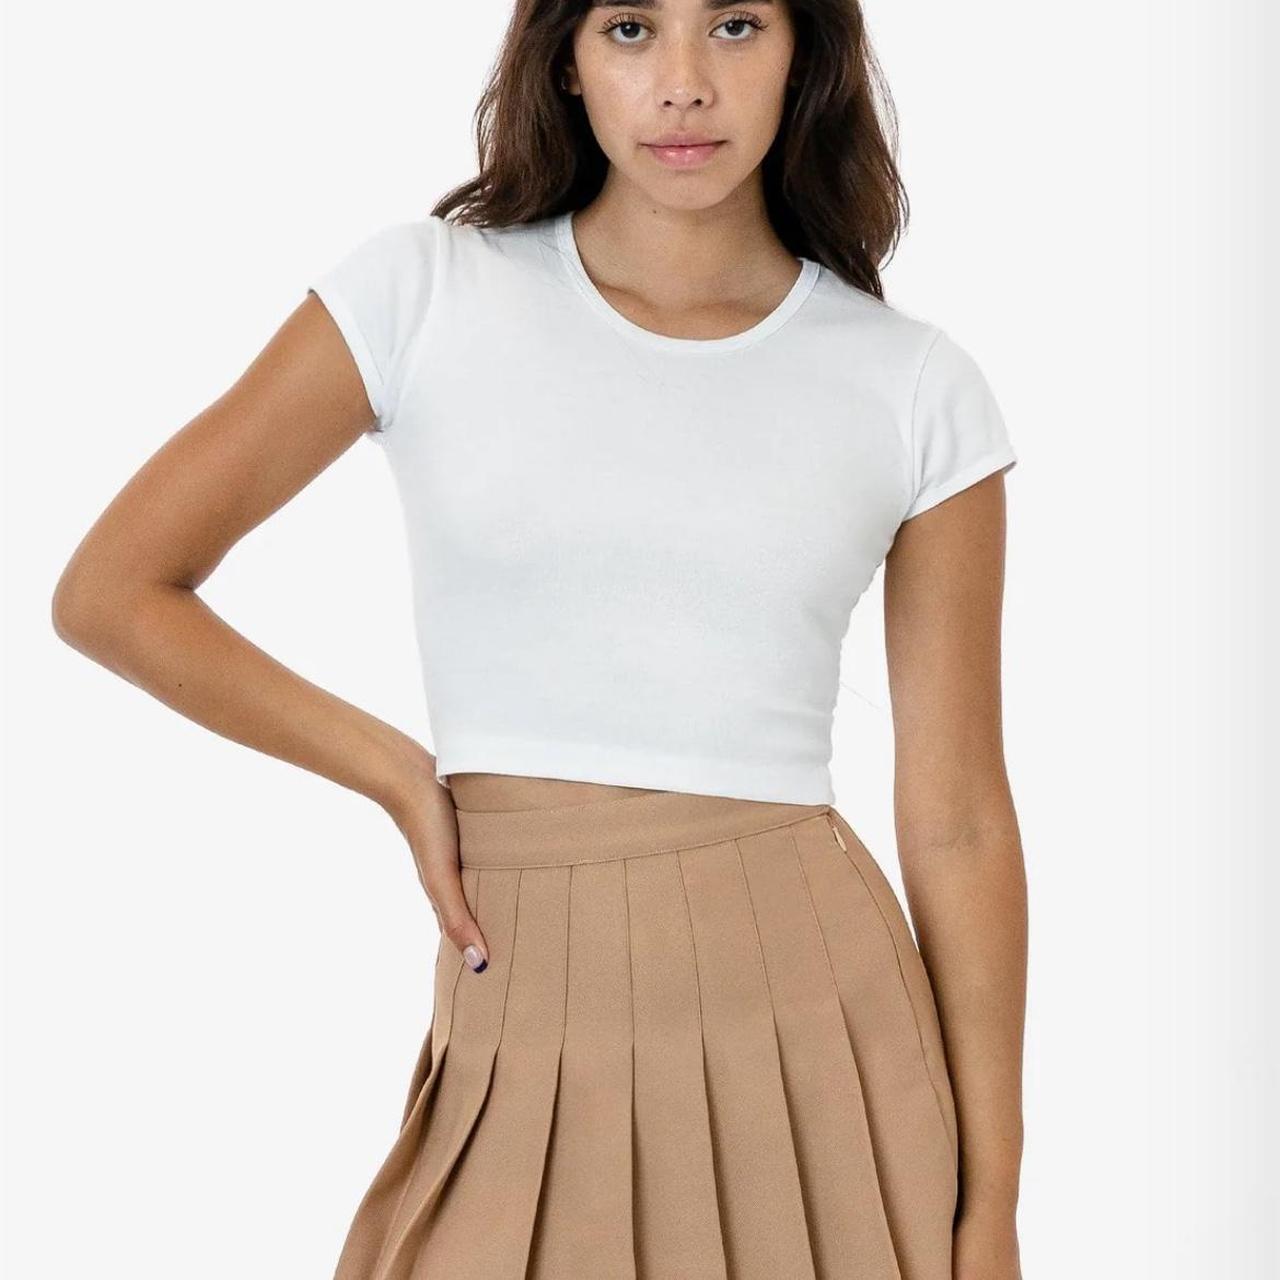 American Apparel Women's Tan Skirt (3)